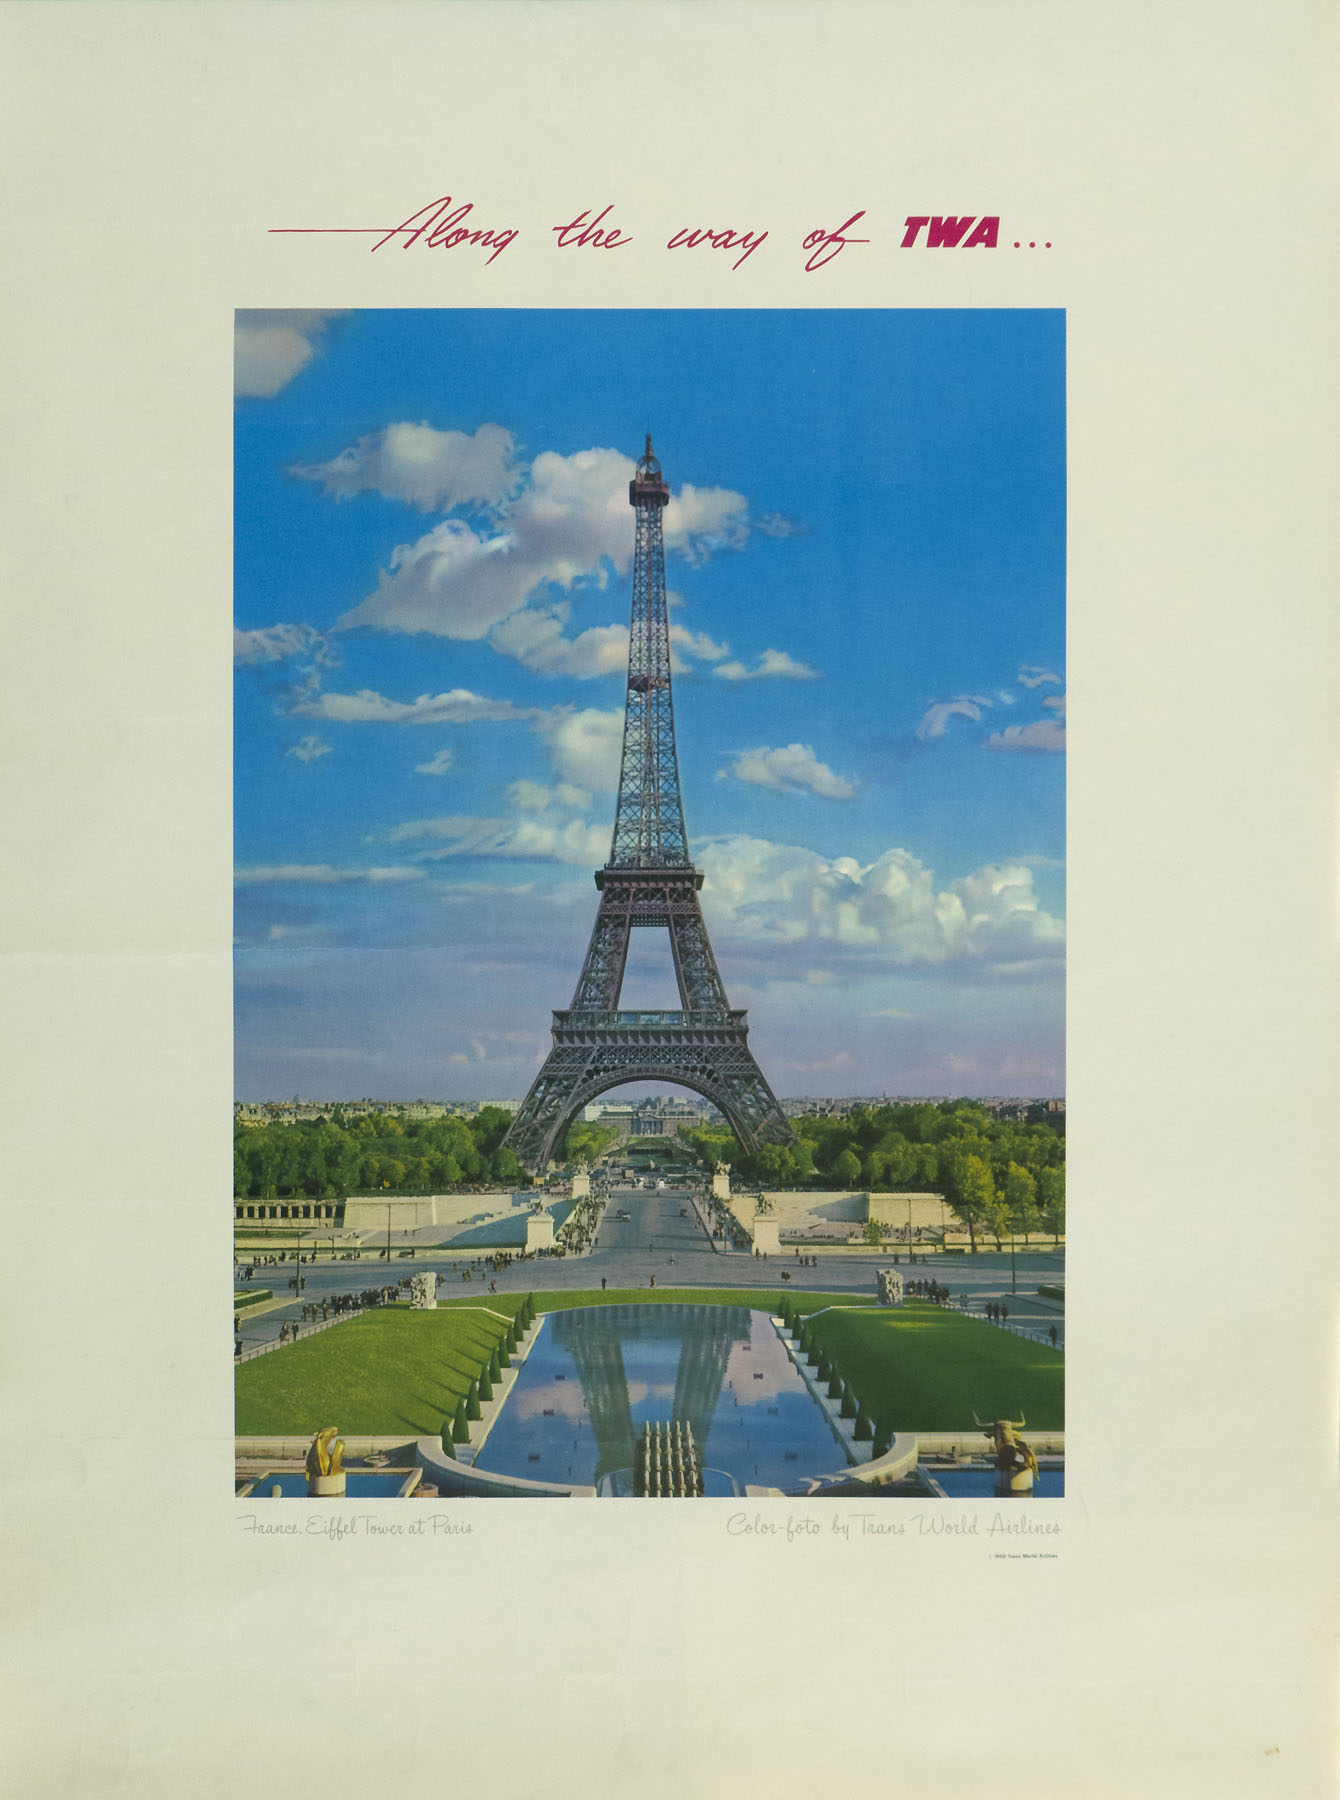 Along the Way of TWA... France Eiffle Tower at Paris